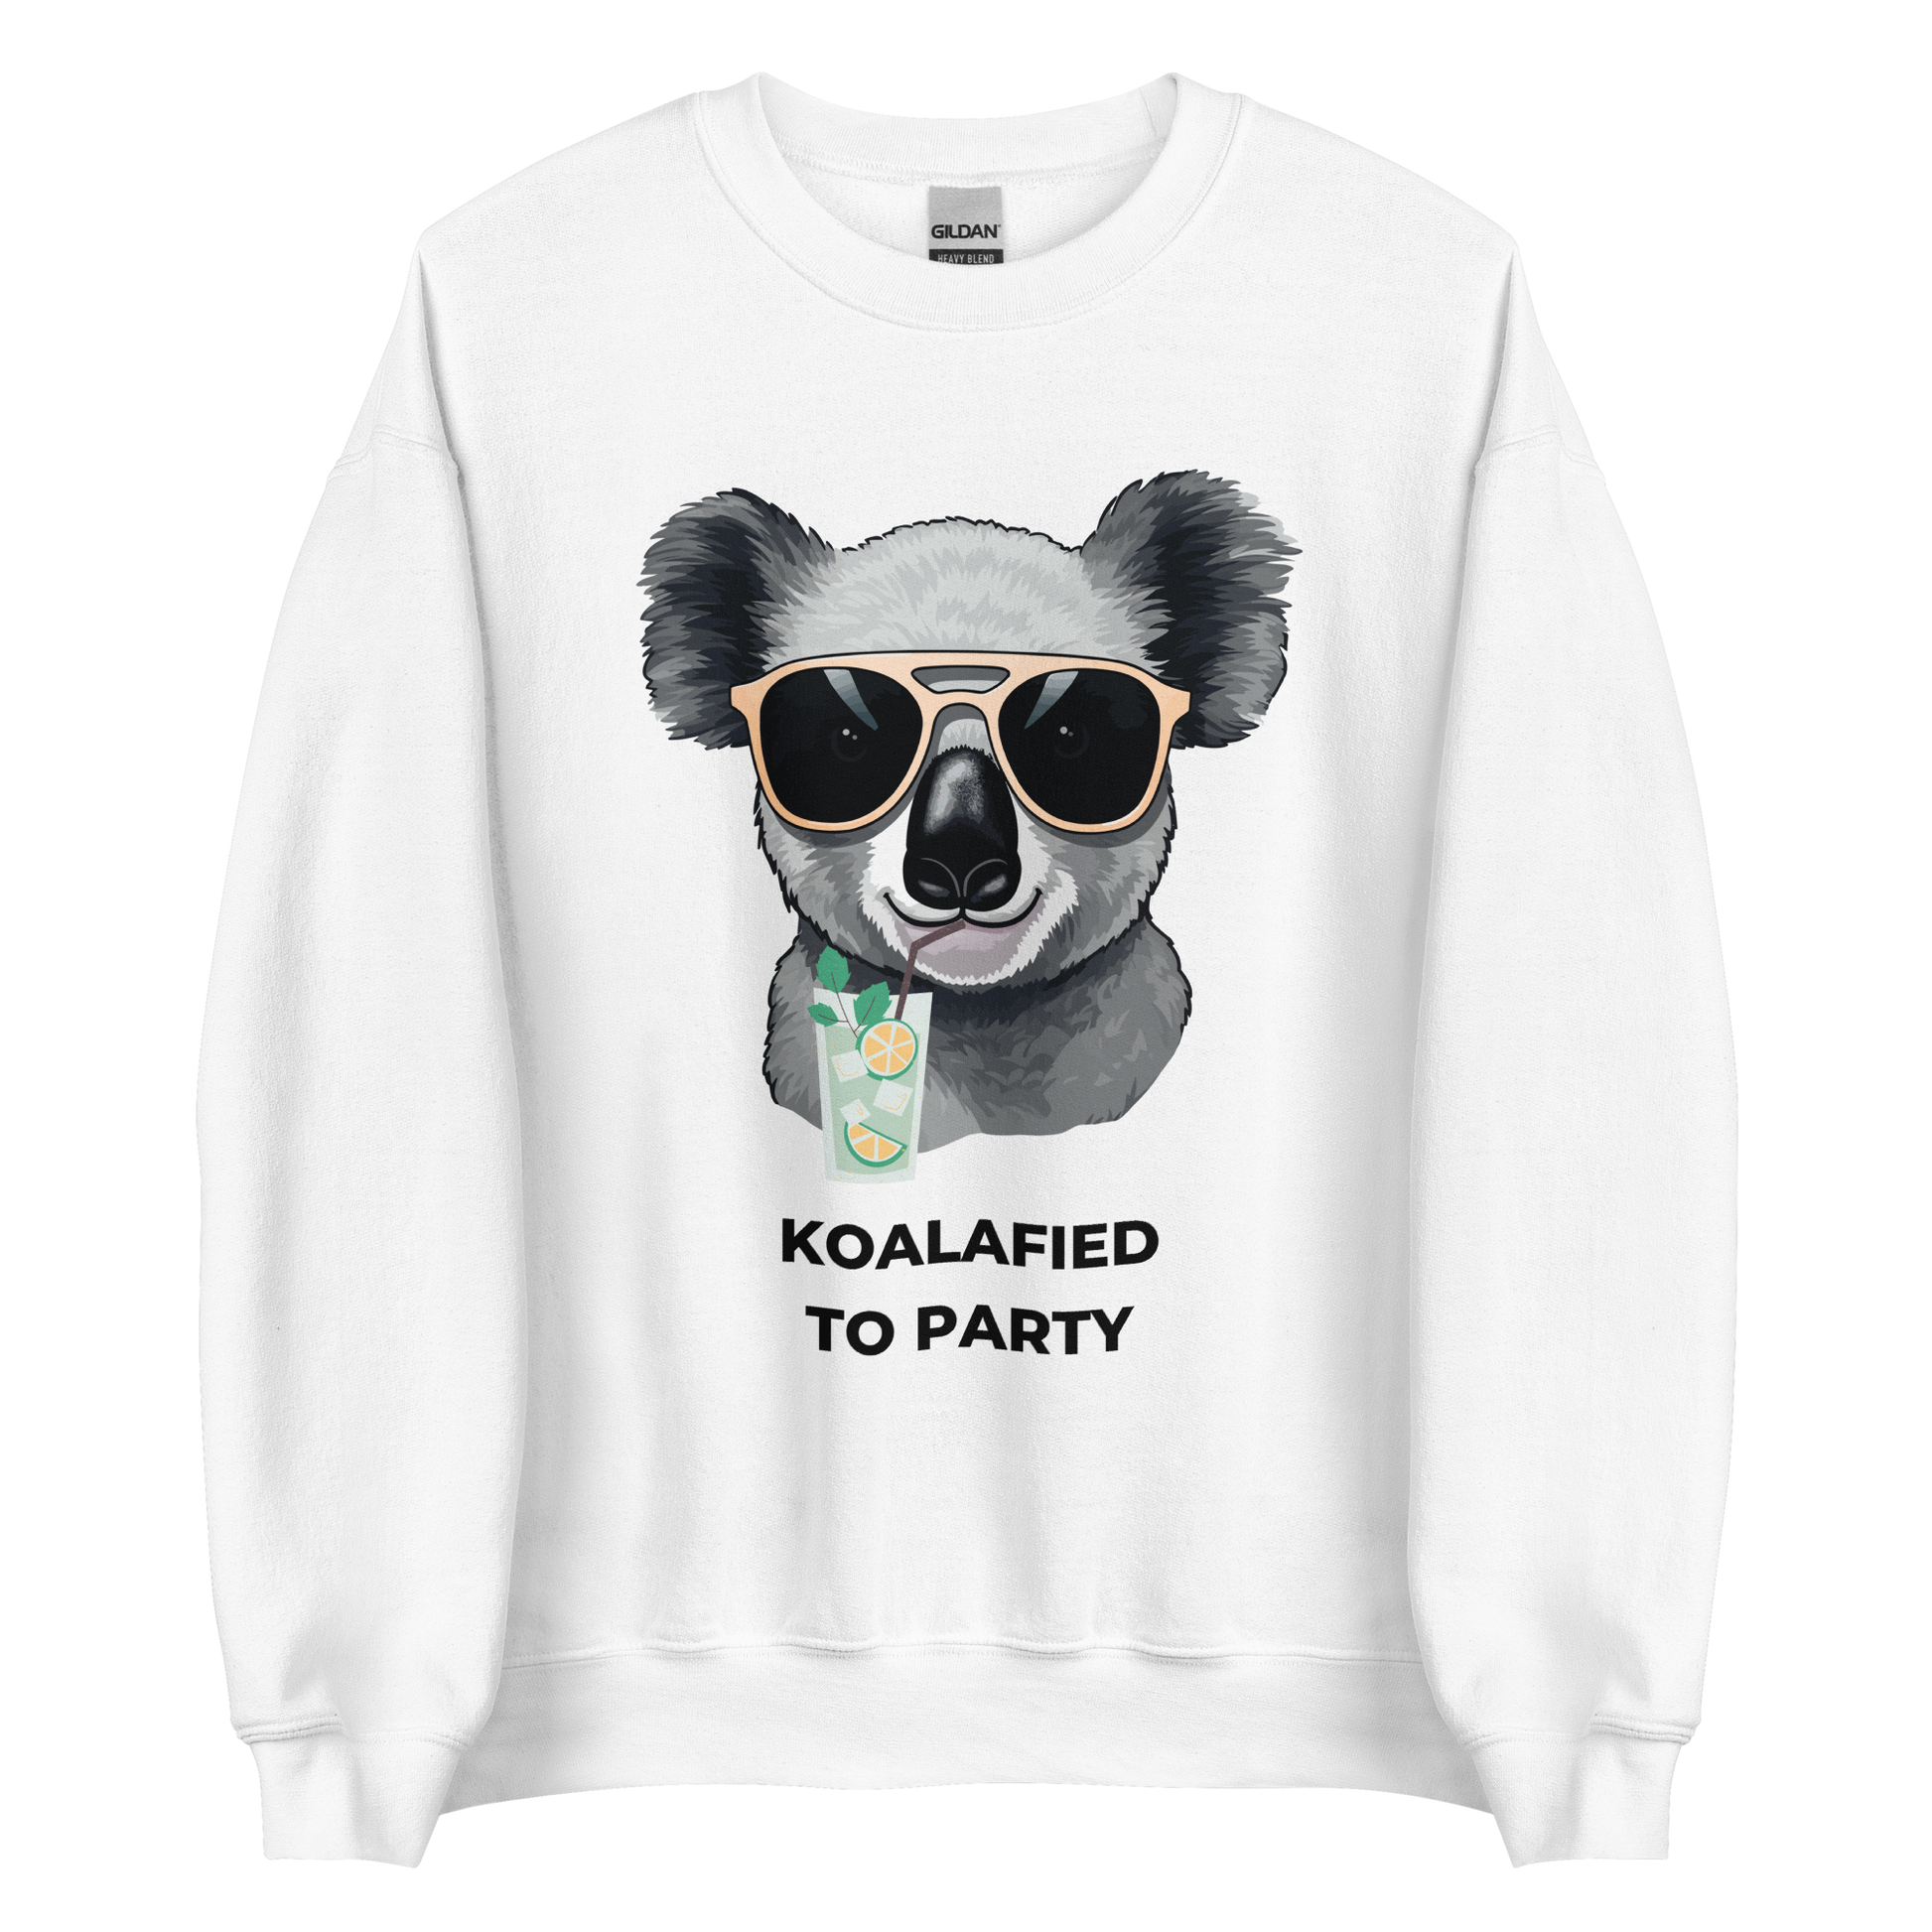 White Koala Sweatshirt featuring an adorable Koalafied To Party graphic on the chest - Funny Graphic Koala Sweatshirts - Boozy Fox